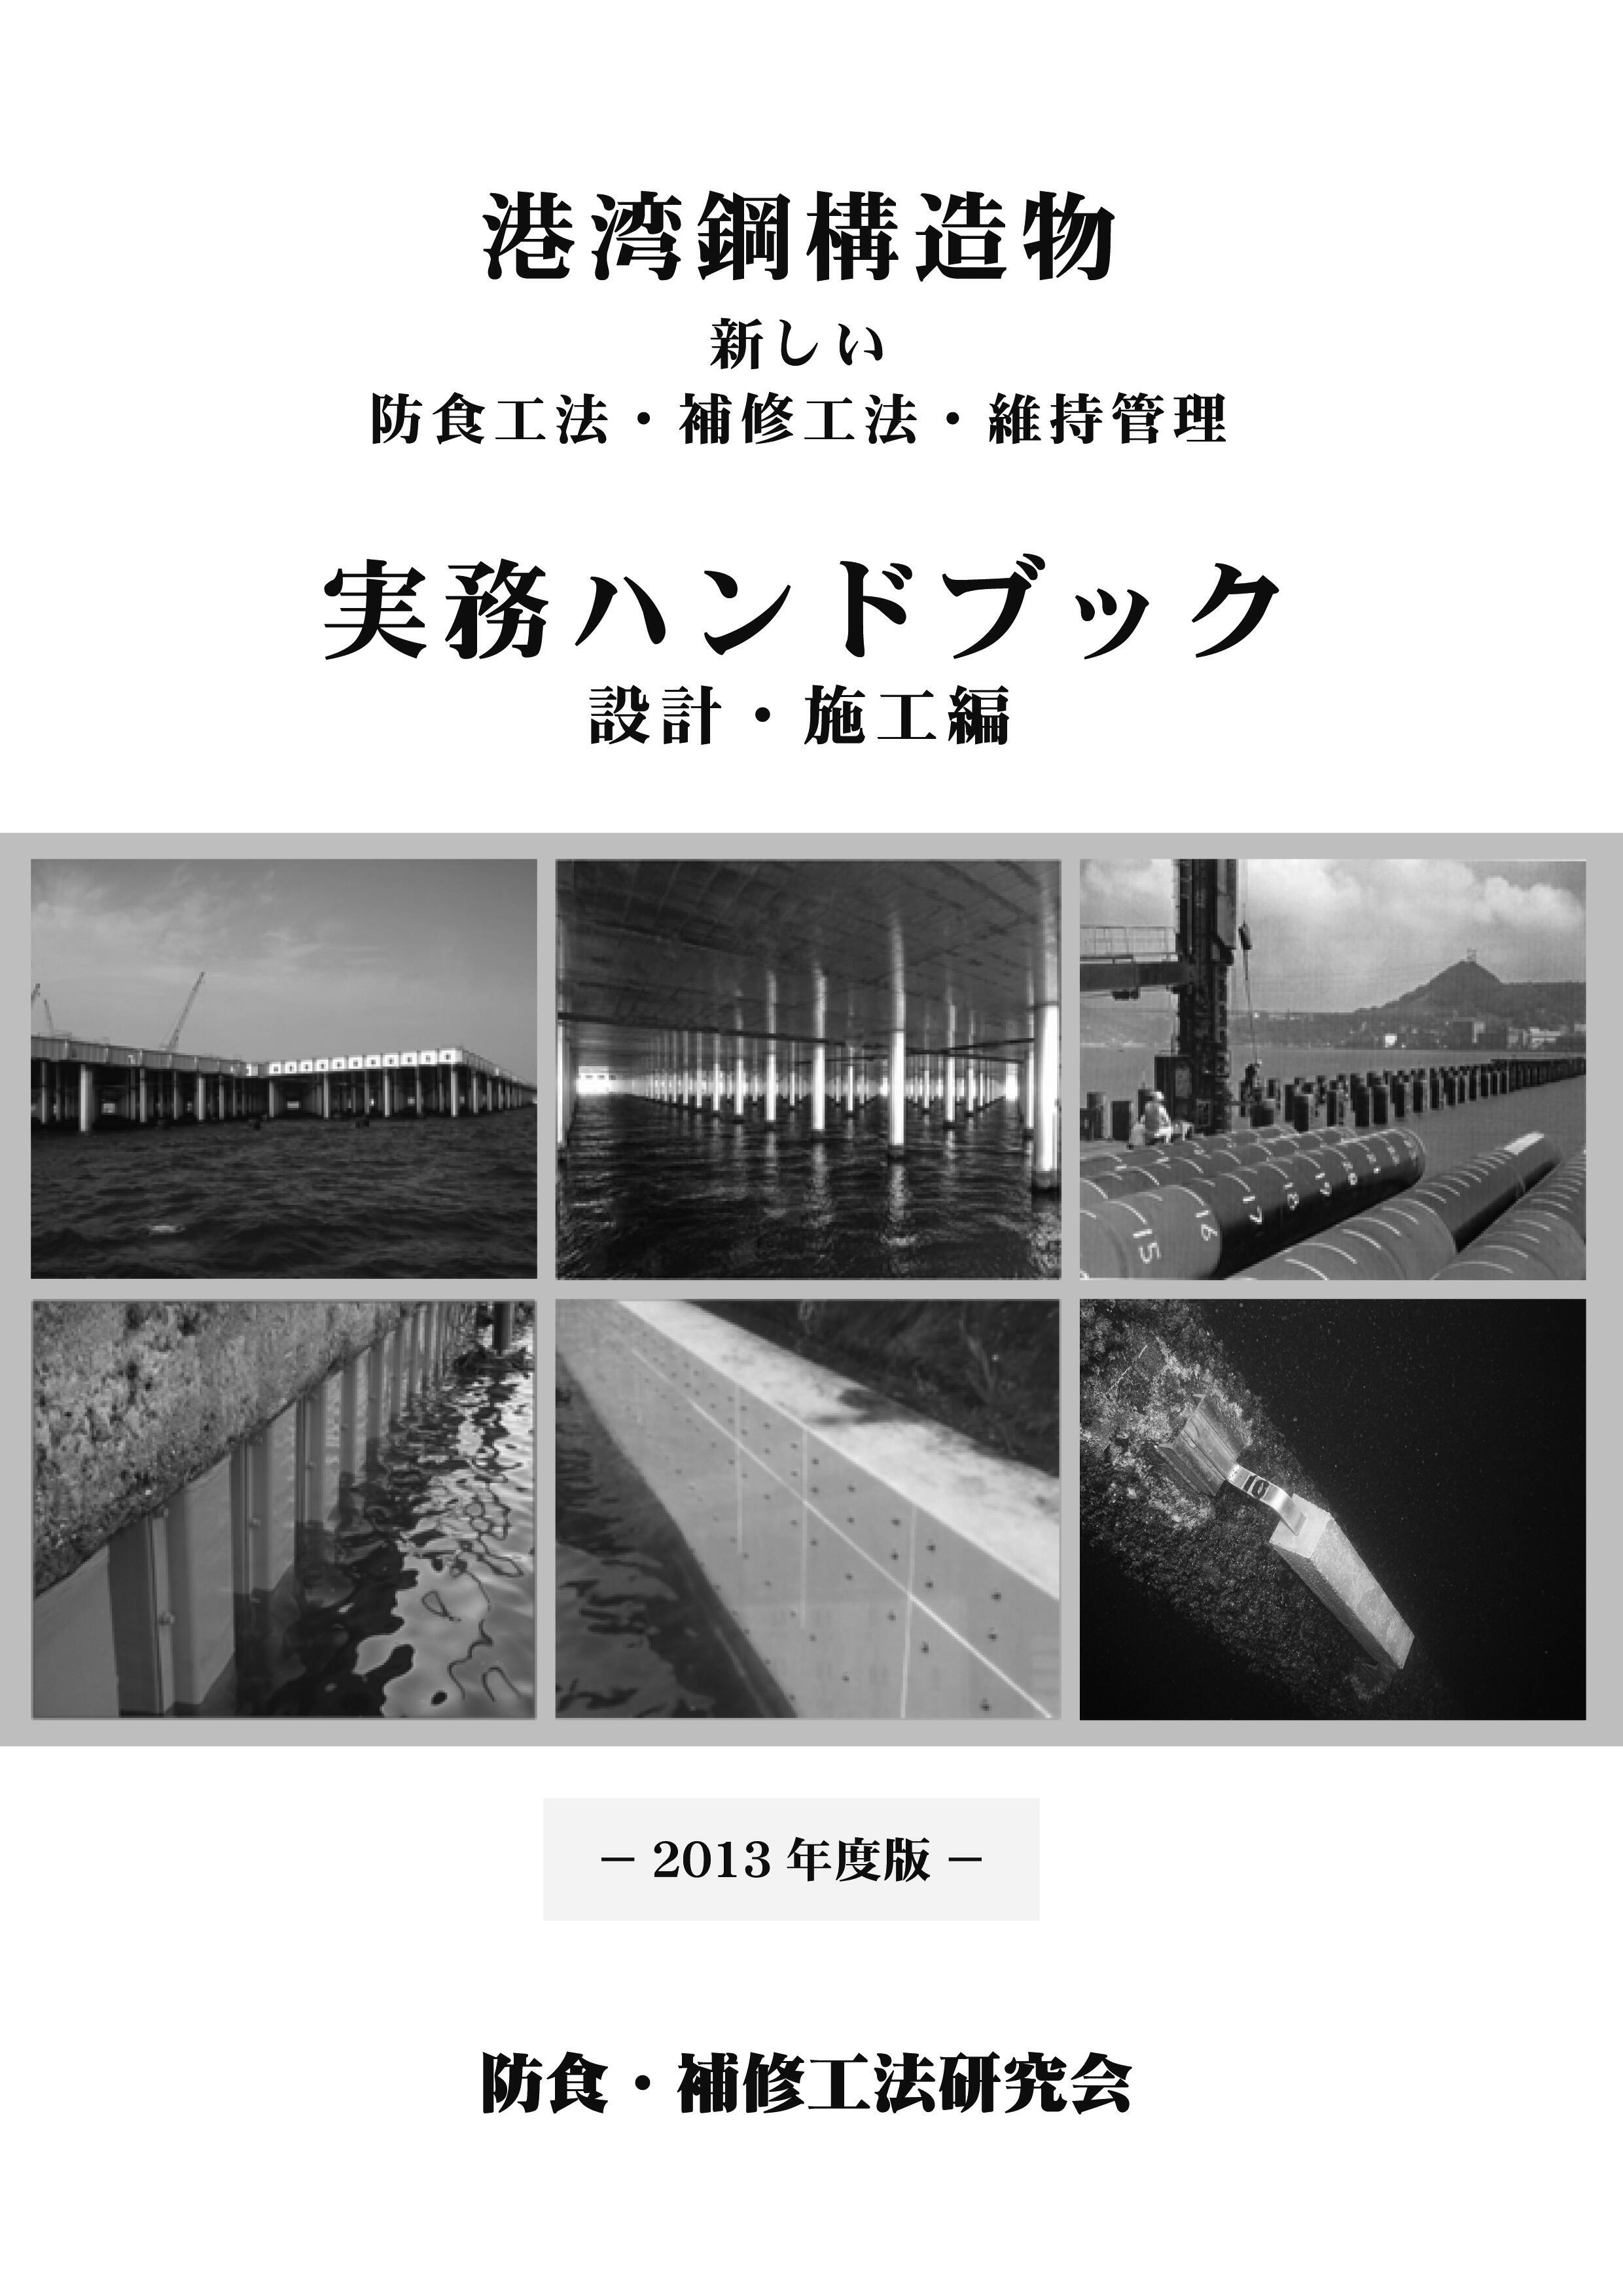 港湾鋼構造物 新しい防食工法・補修工法・維持管理 実務ハンドブック2013年度版